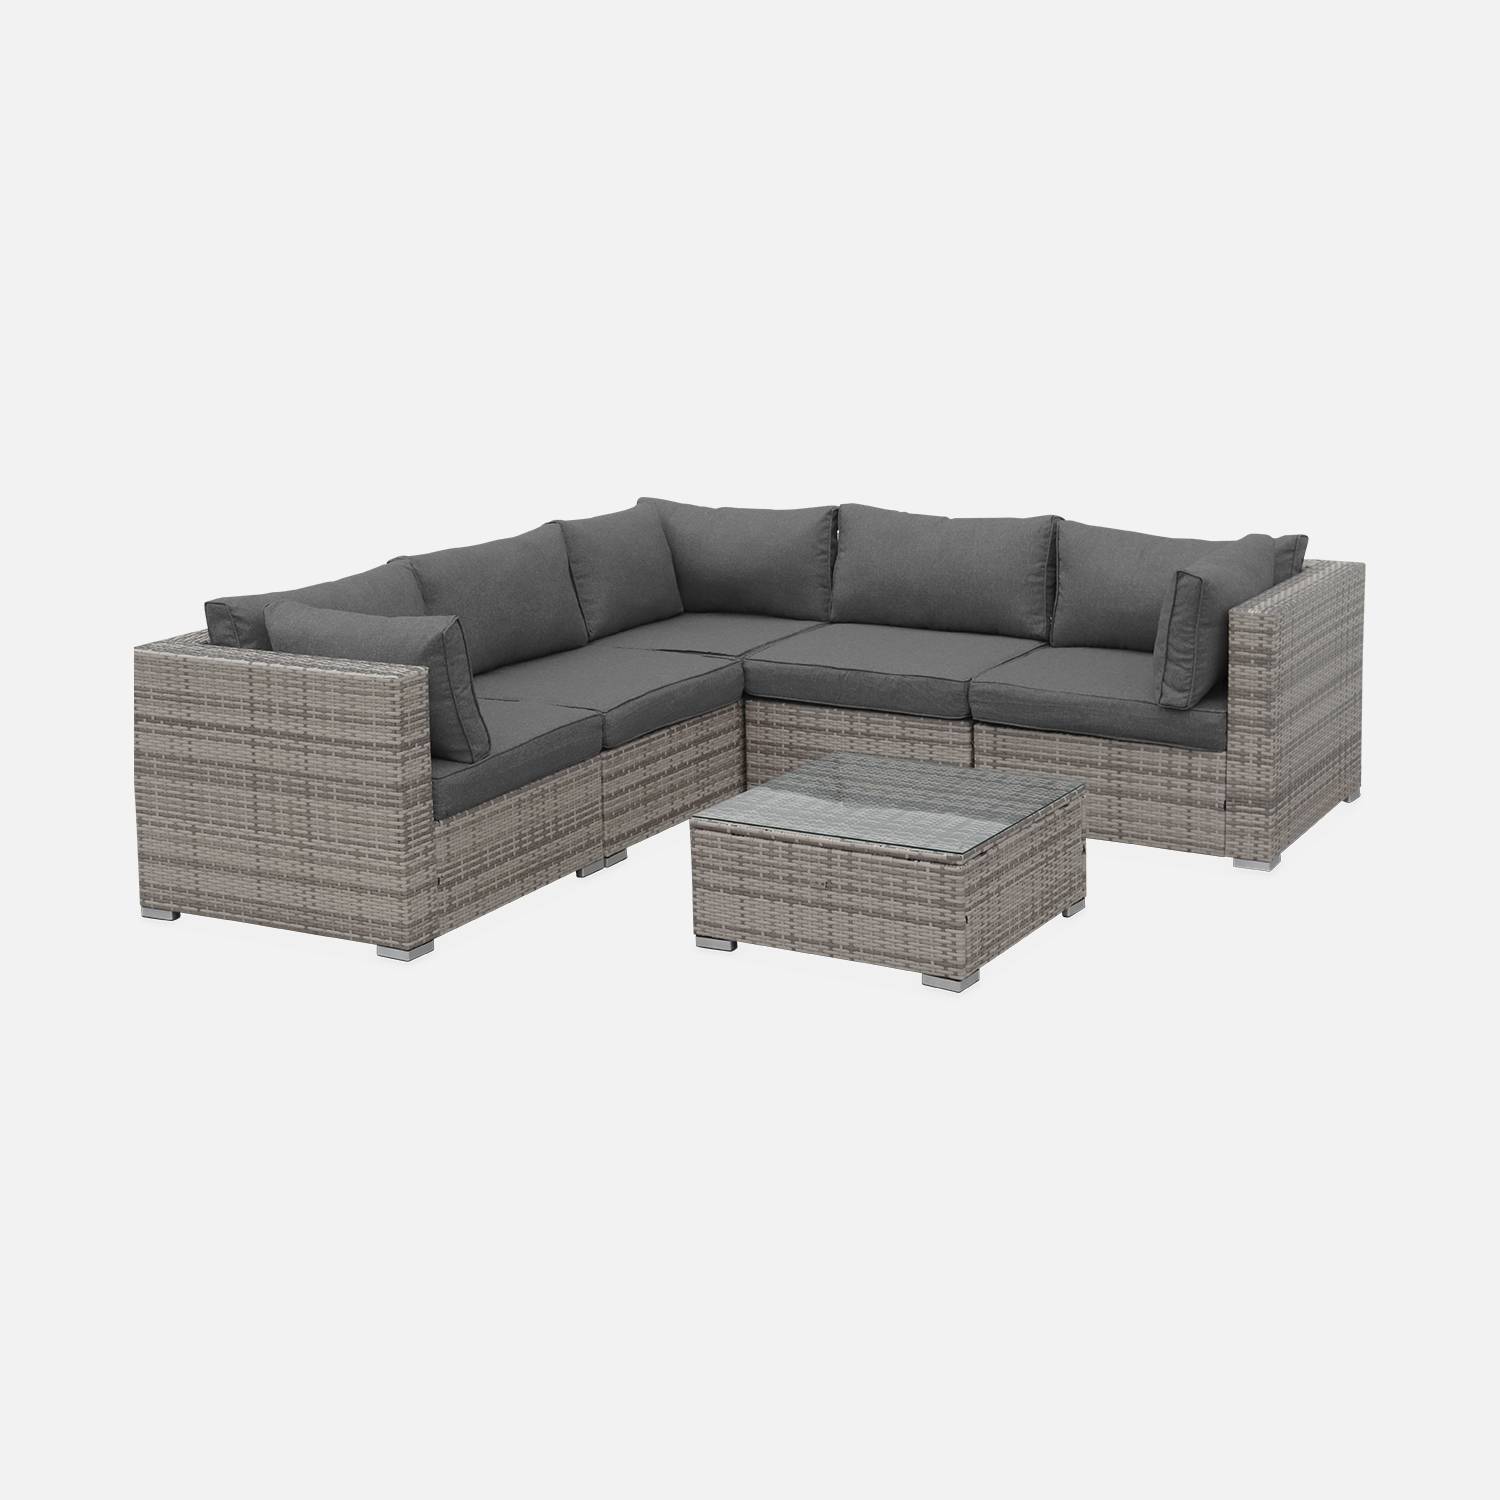 Conjunto de muebles de jardín de resina tejida - Napoli - Tonos de gris, Cojines Gris - 5 plazas | sweeek